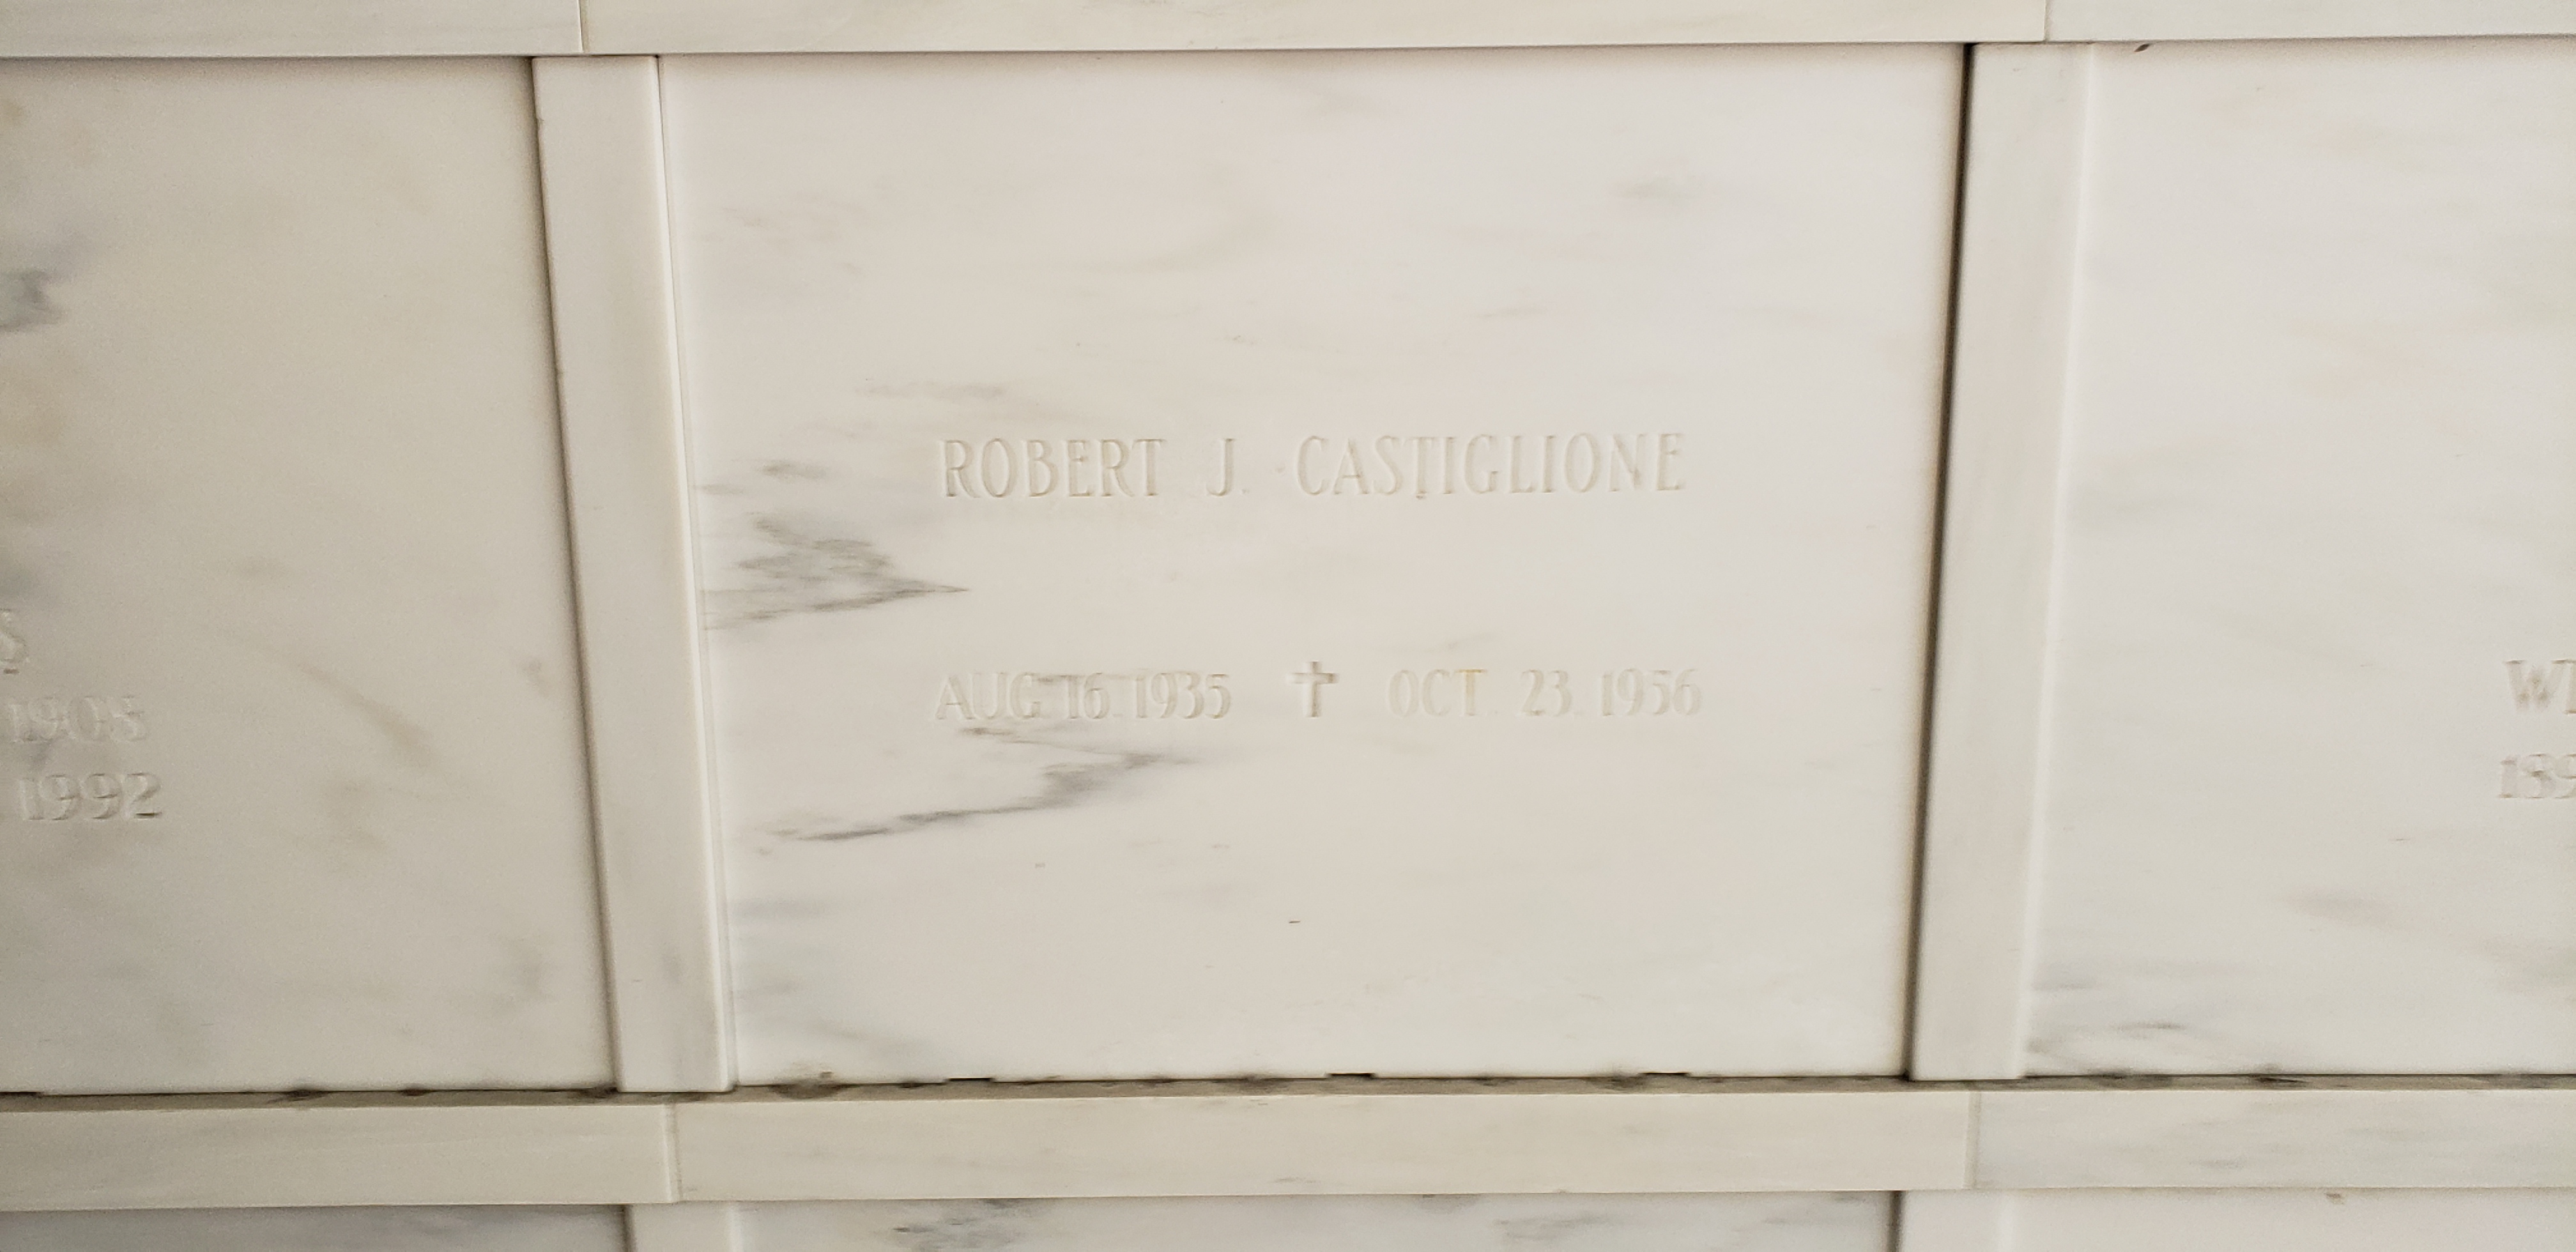 Robert J Castiglione